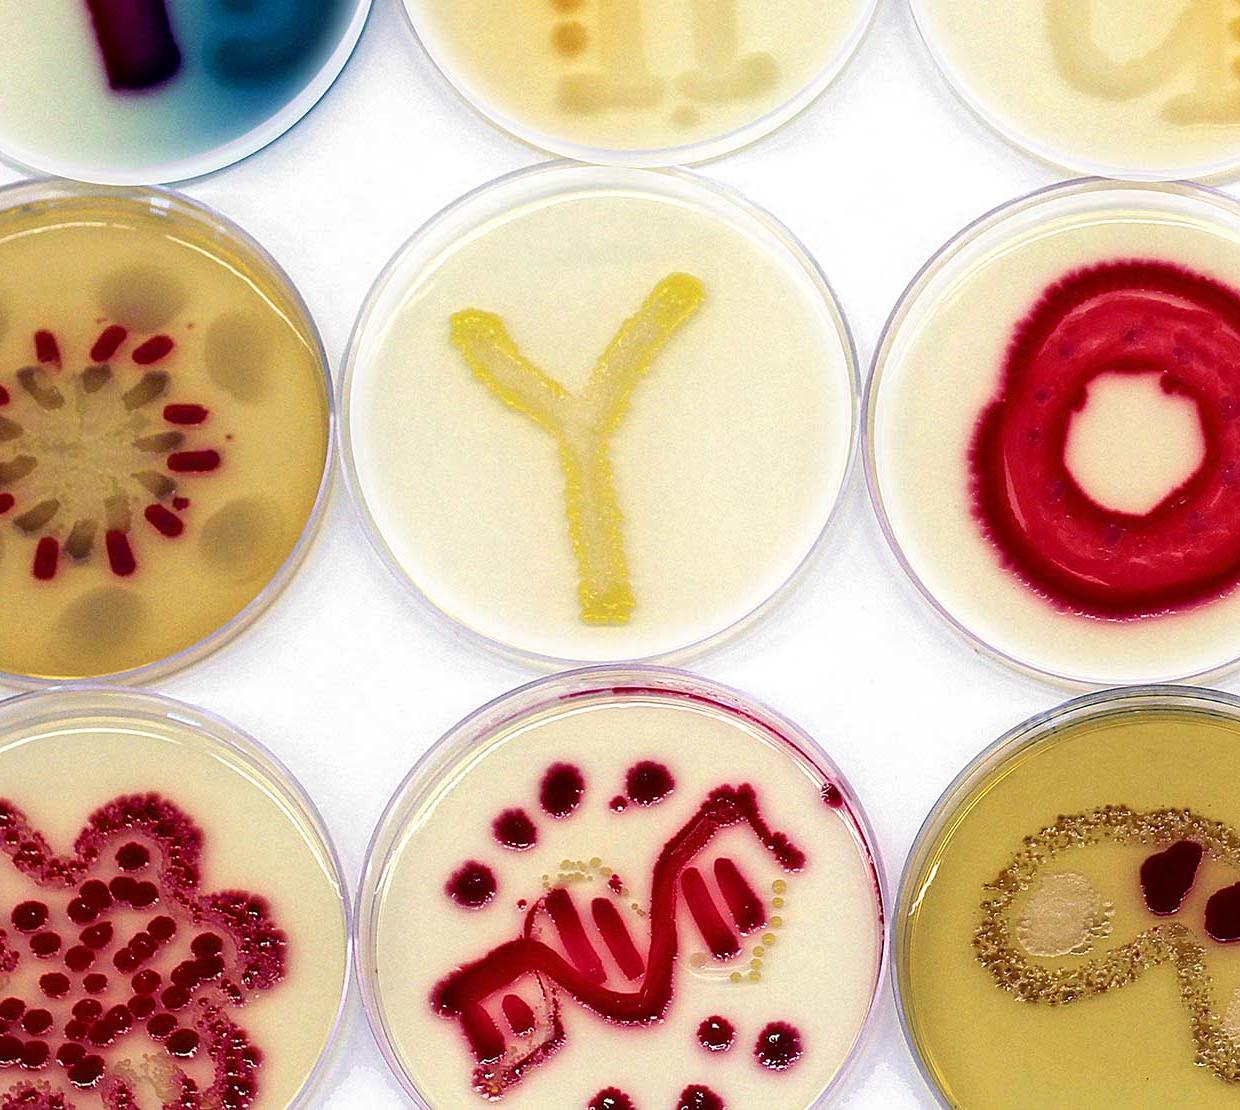 Petri dishes with micro-biome artwork